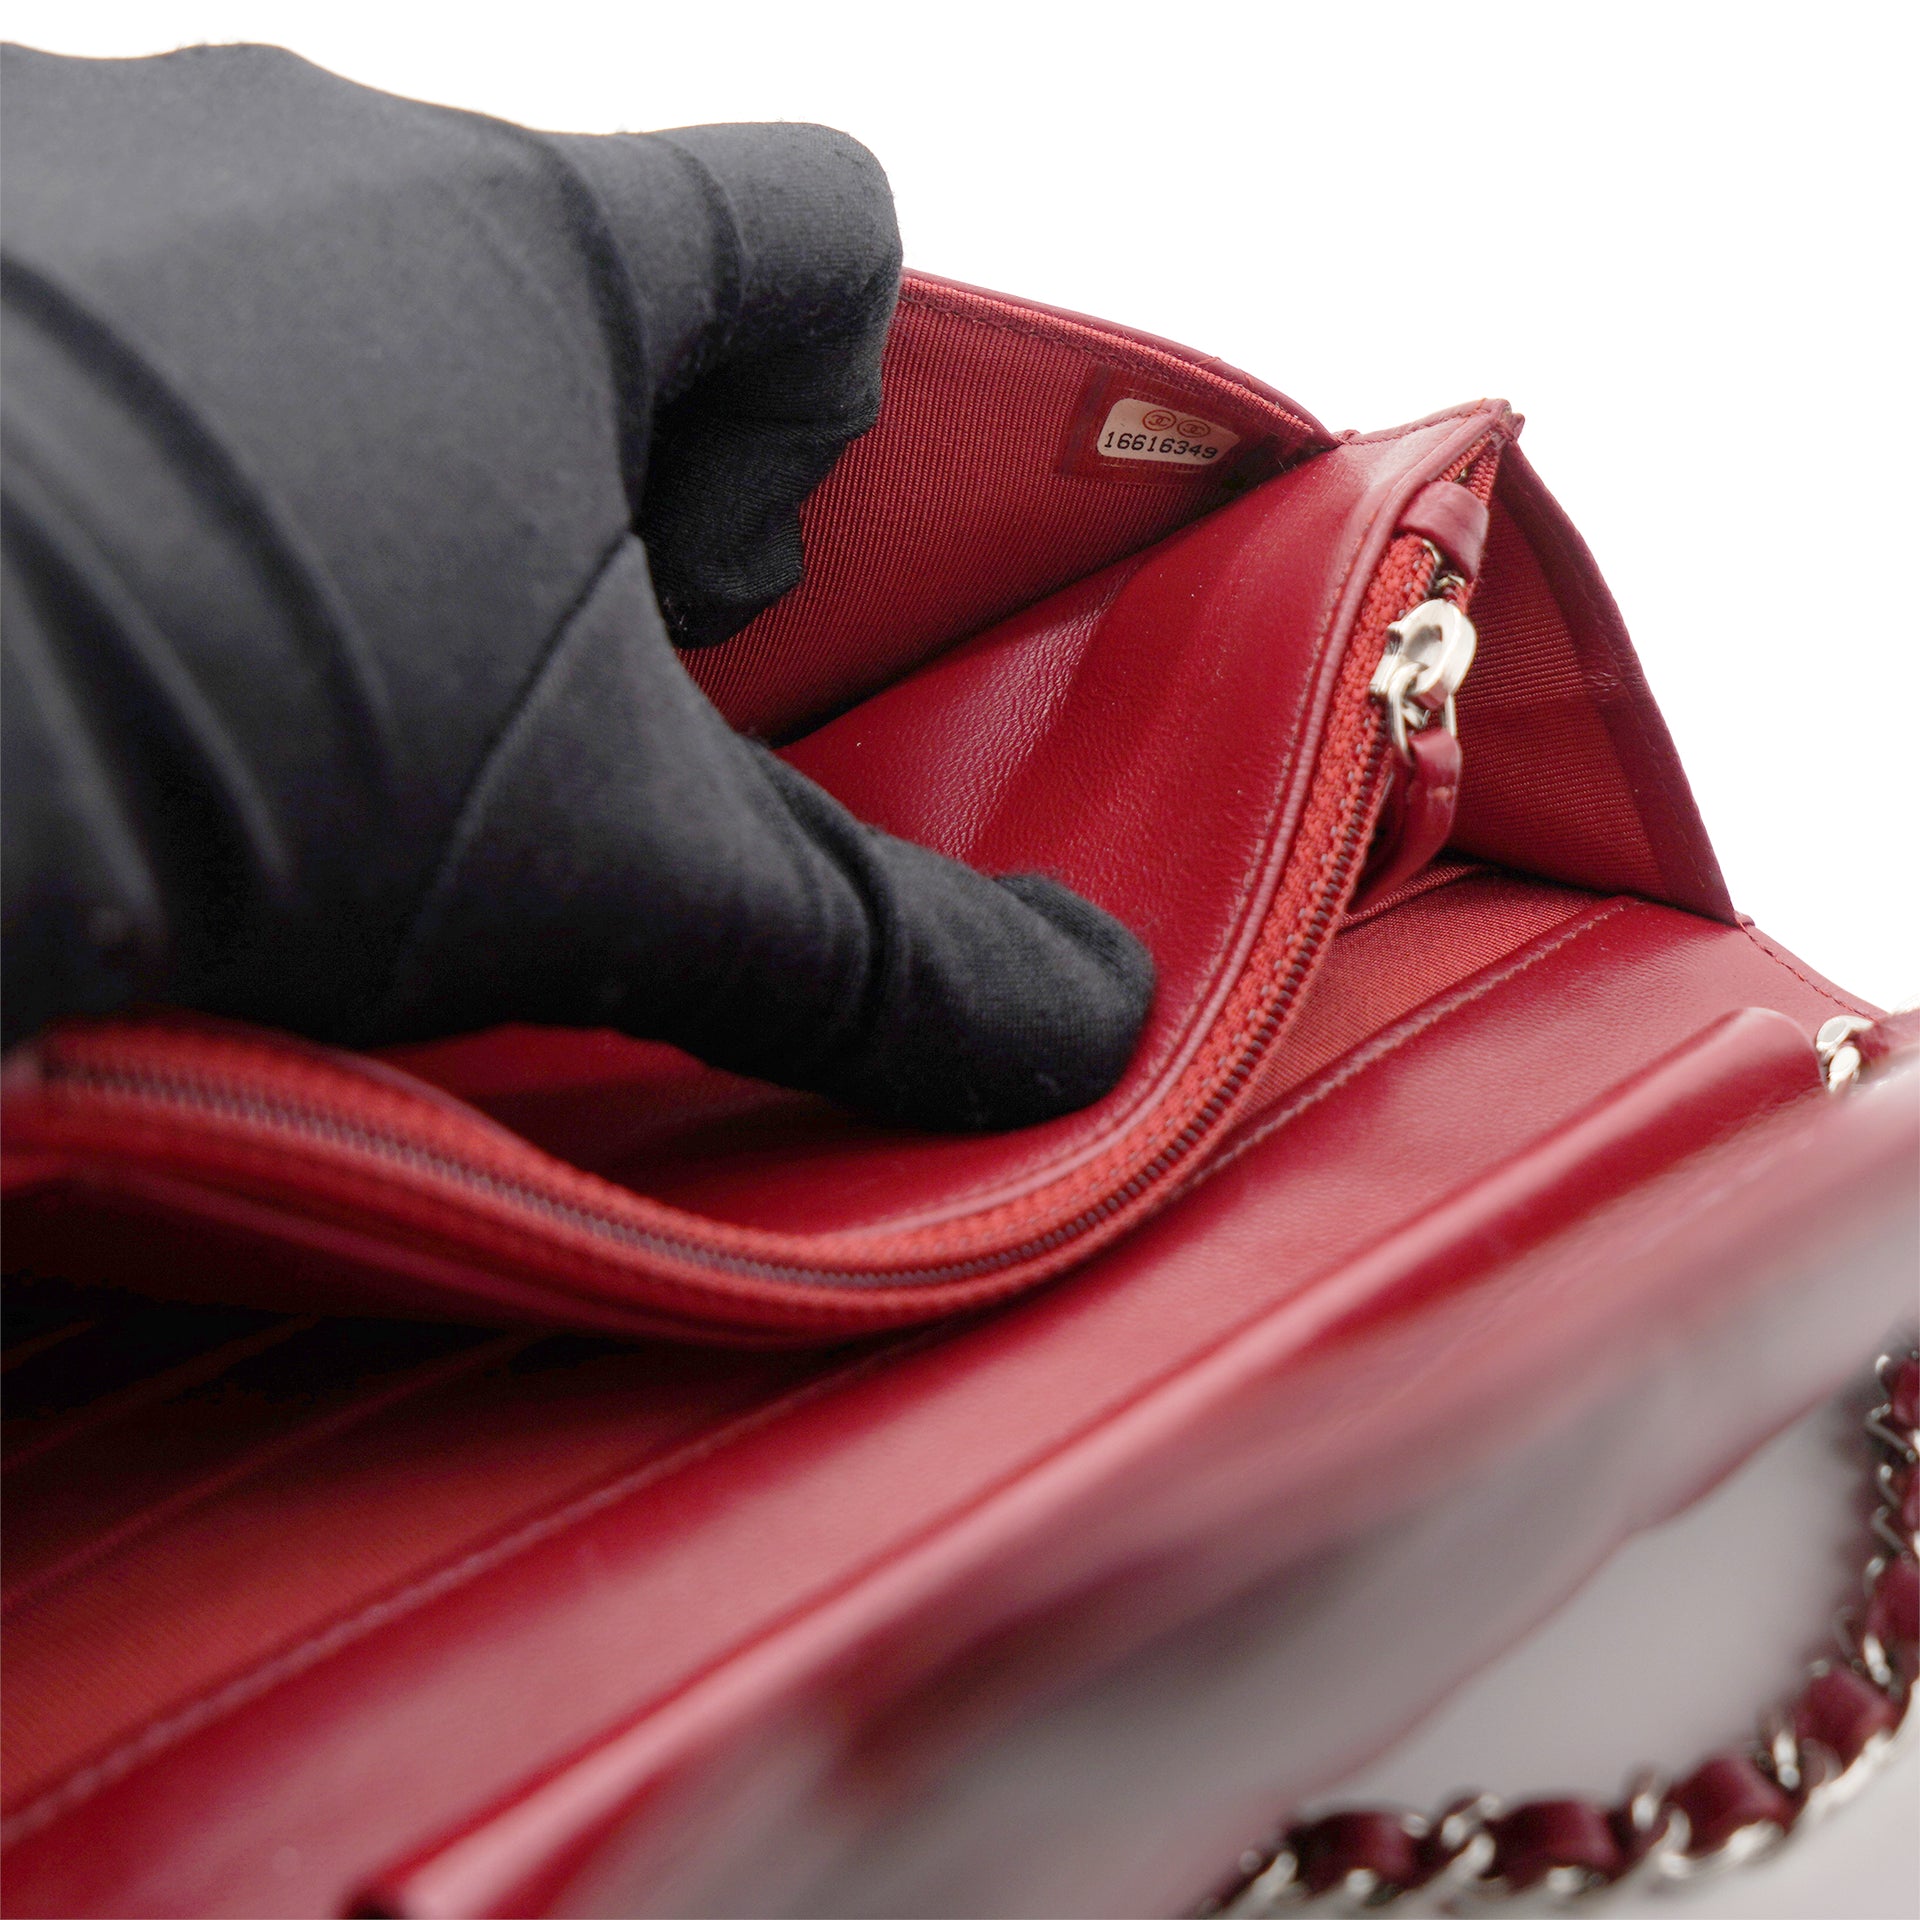 Chanel Burgundy Quilted Calfskin Leather Medium Vanity Case